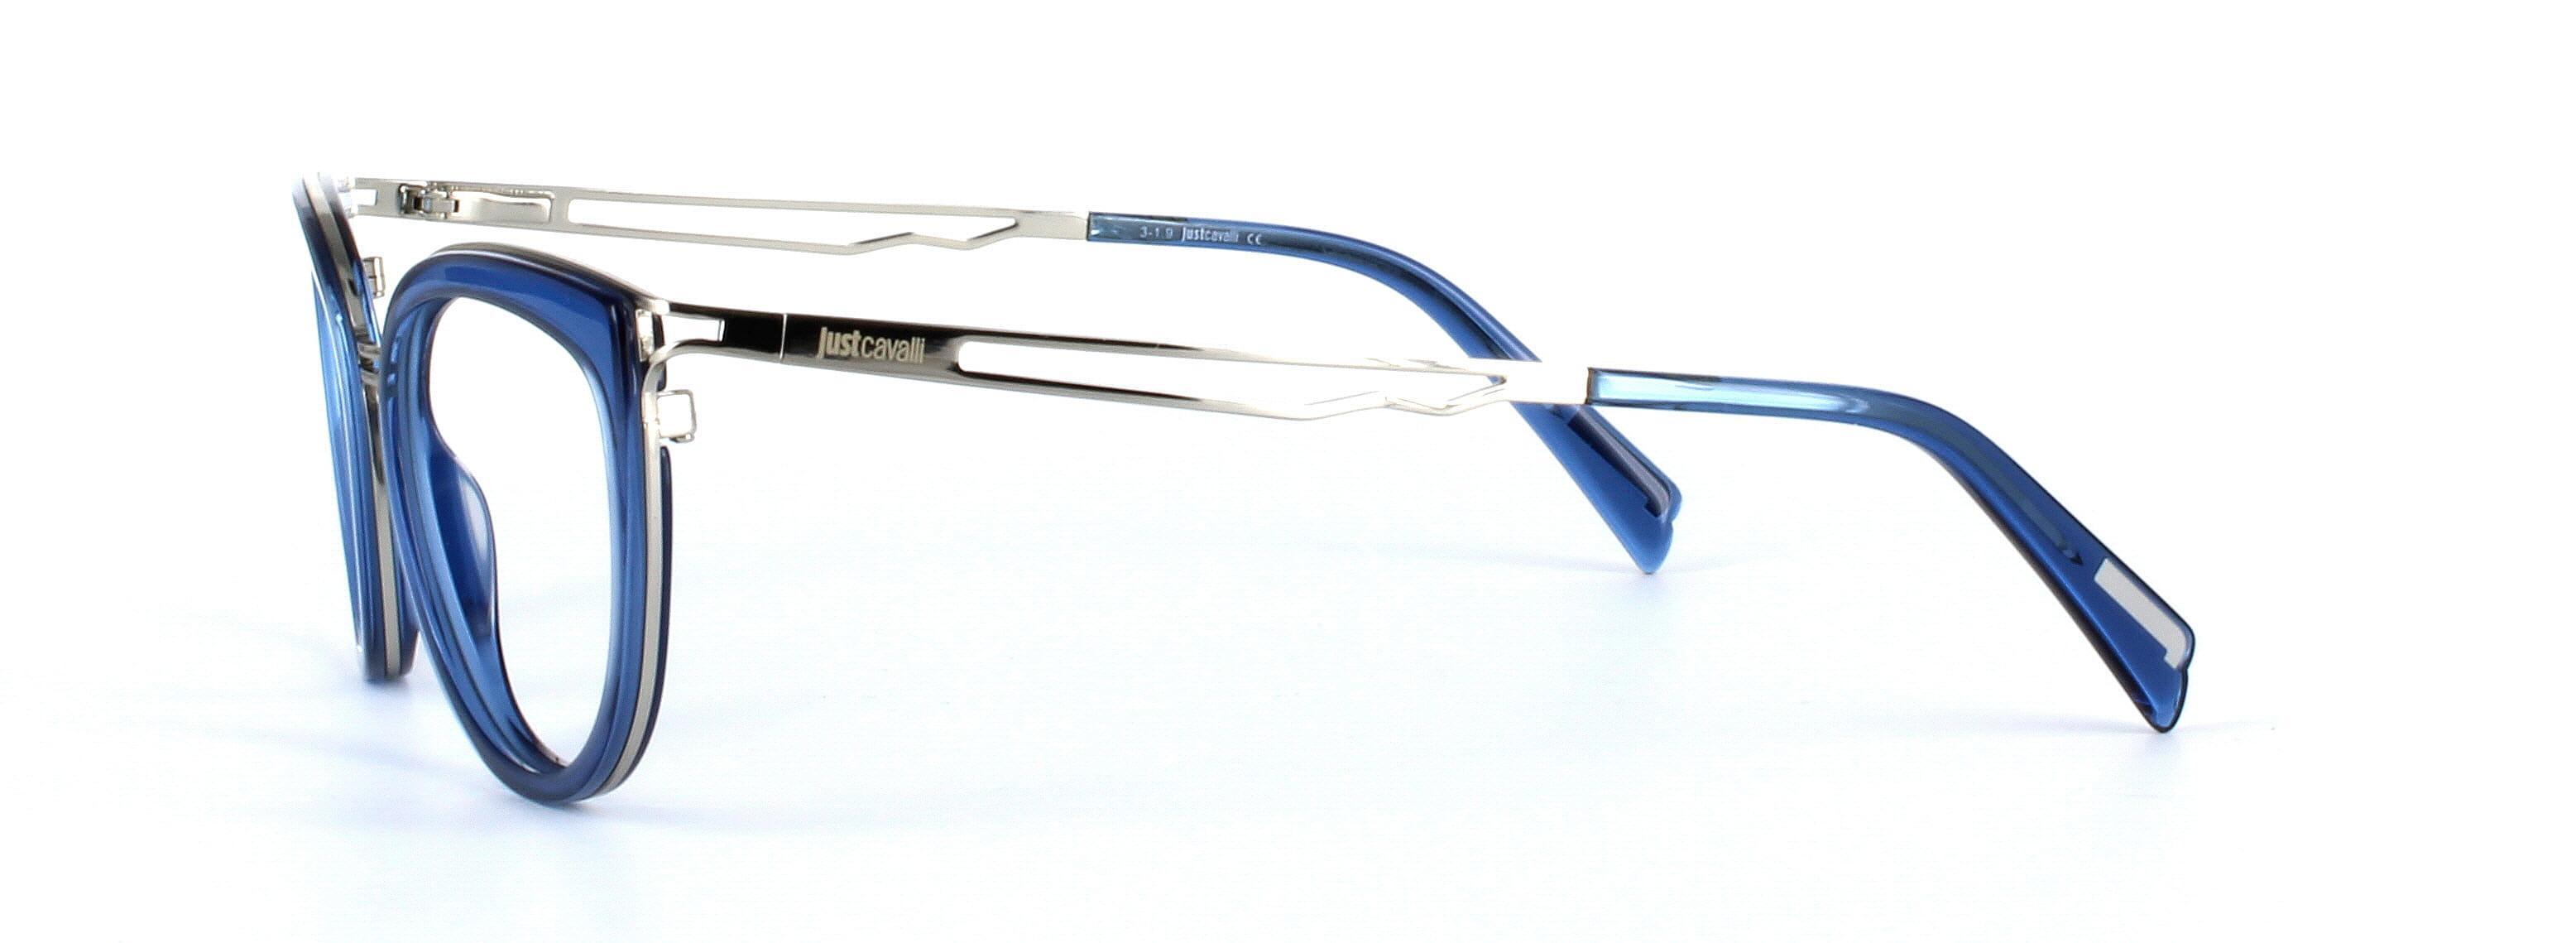 JUST CAVALLI (JC0857-090) Blue Full Rim Cat Eye Acetate Glasses - Image View 2